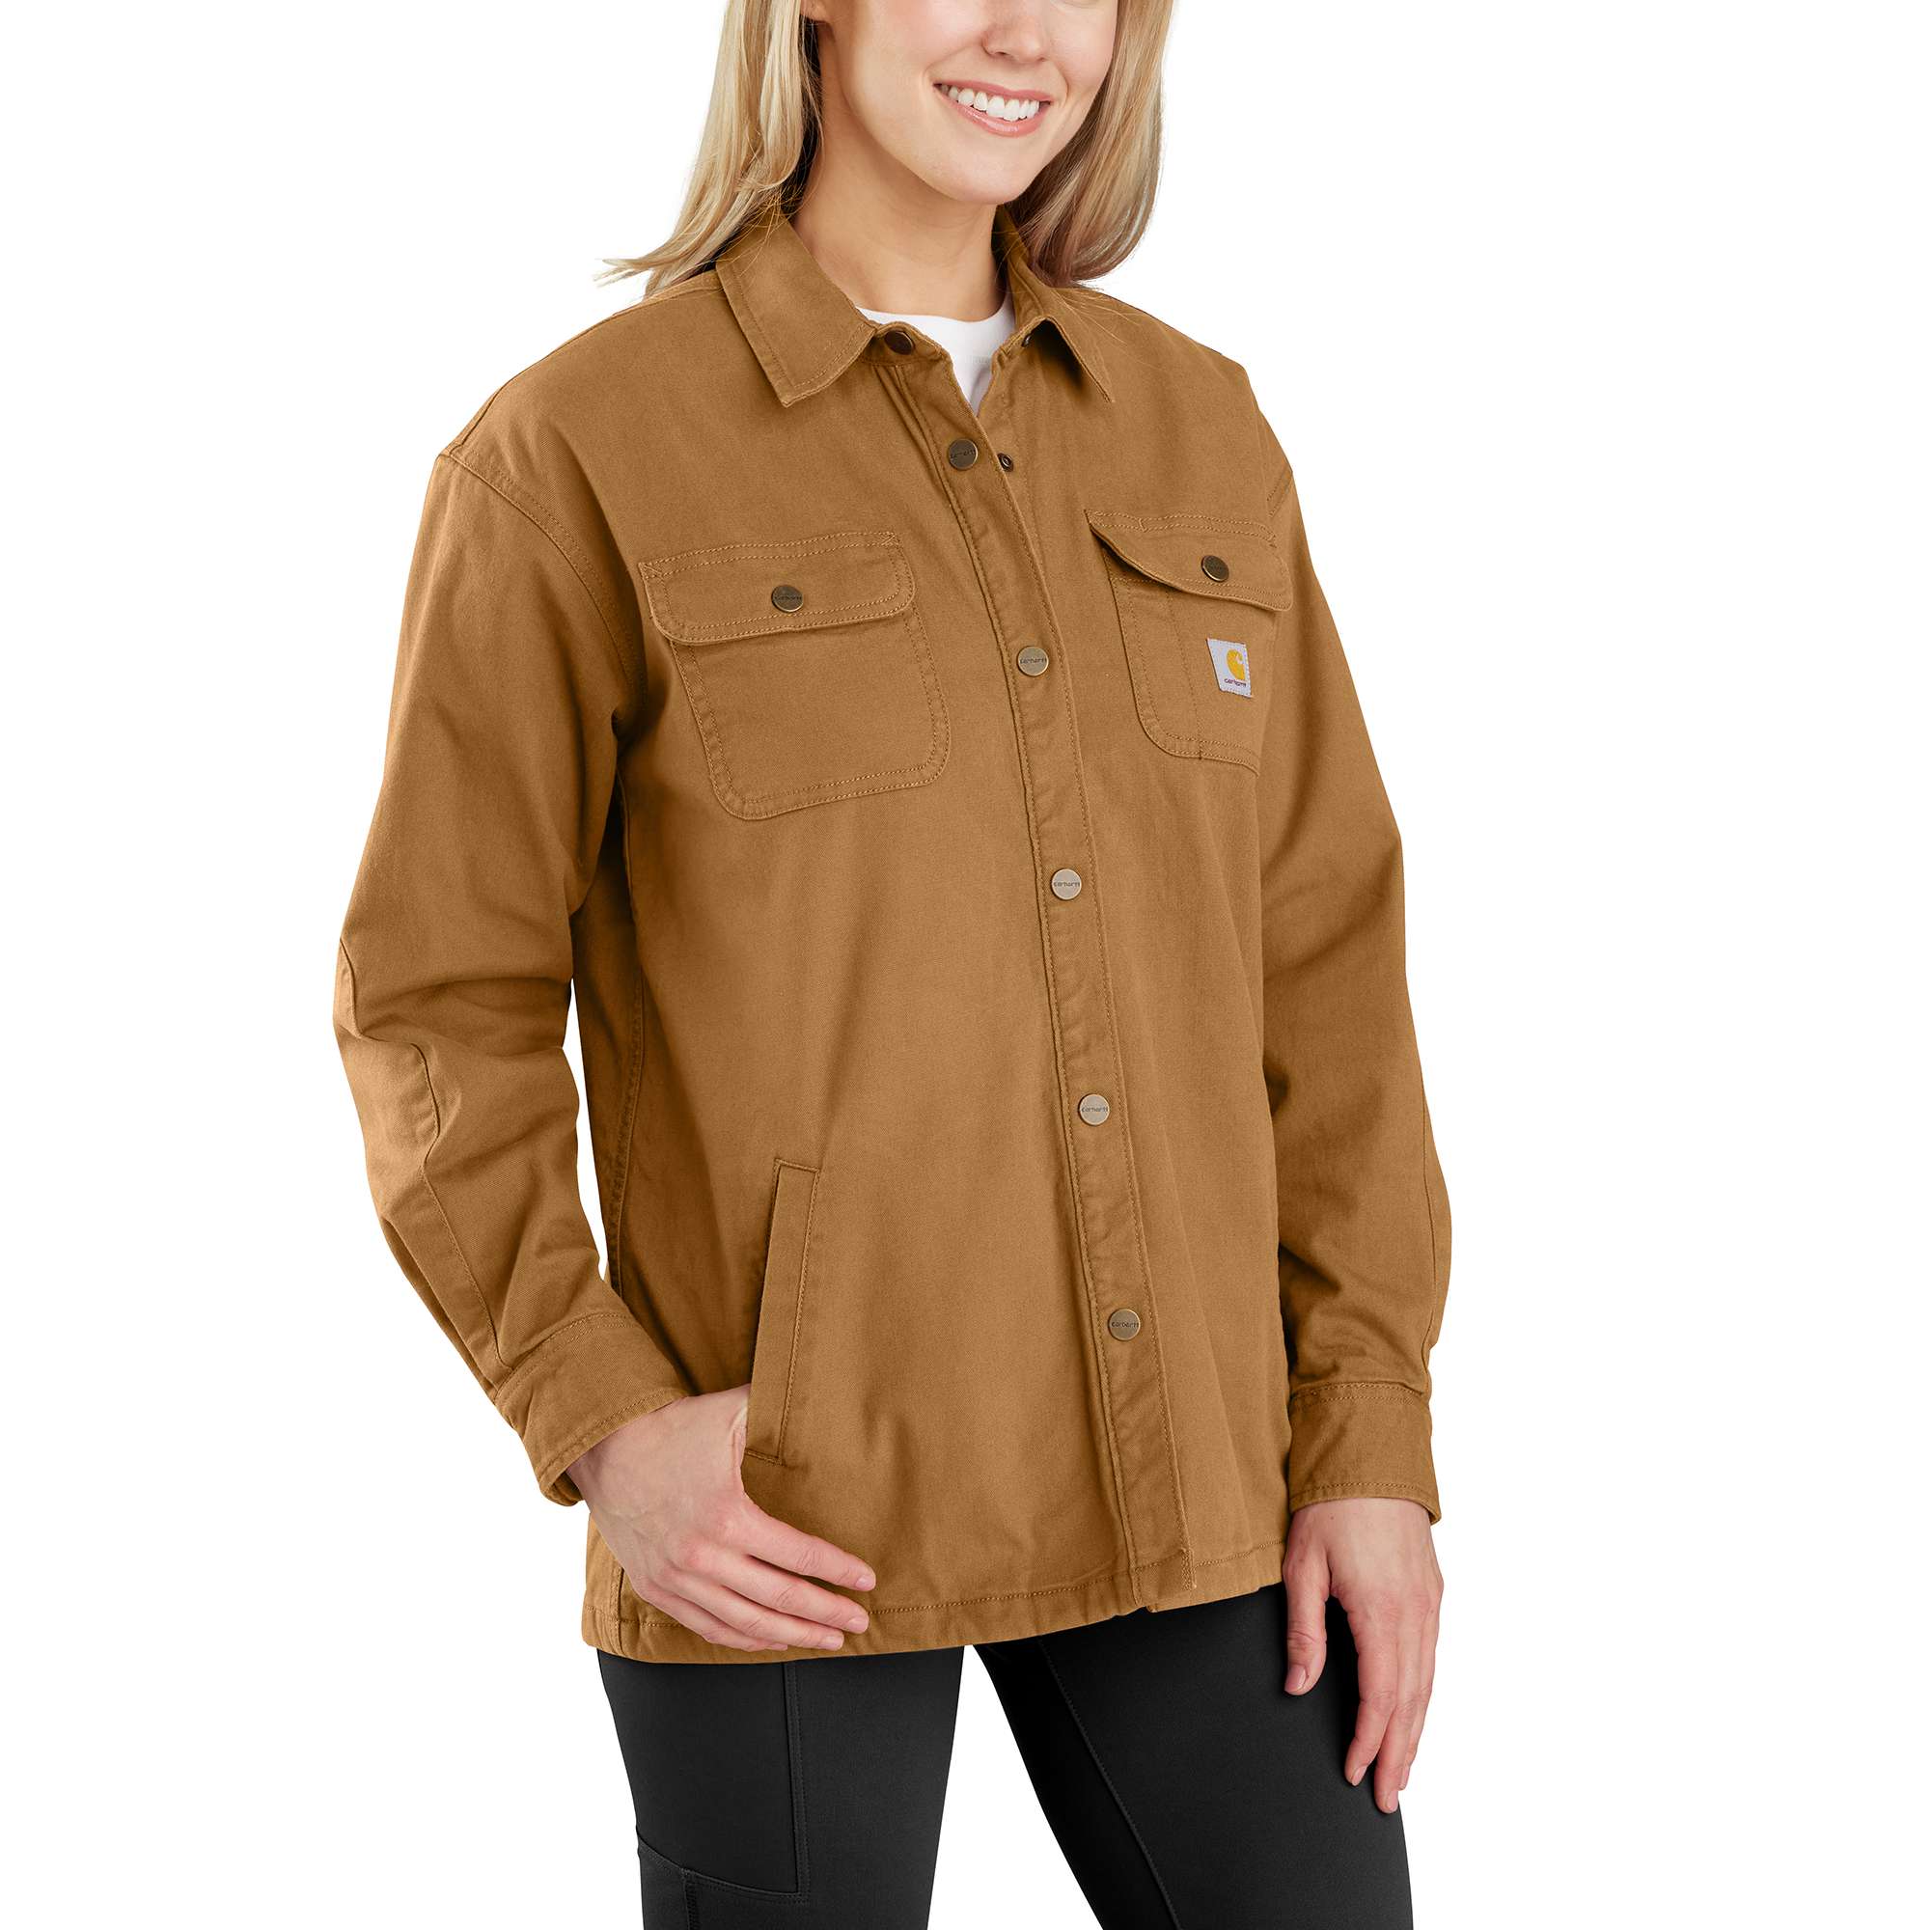 & Shirts Work Uniform Embroidered Company Gear Shirts Carhartt | Custom